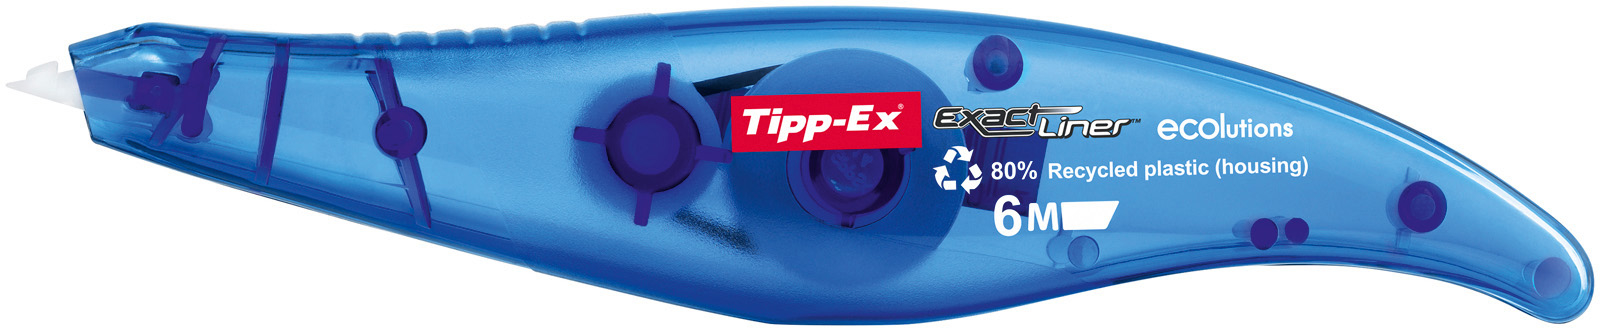 TIPP-EX Rouleaux correction Exactliner 868.0772 ECOlution, Blister 5mmx6m